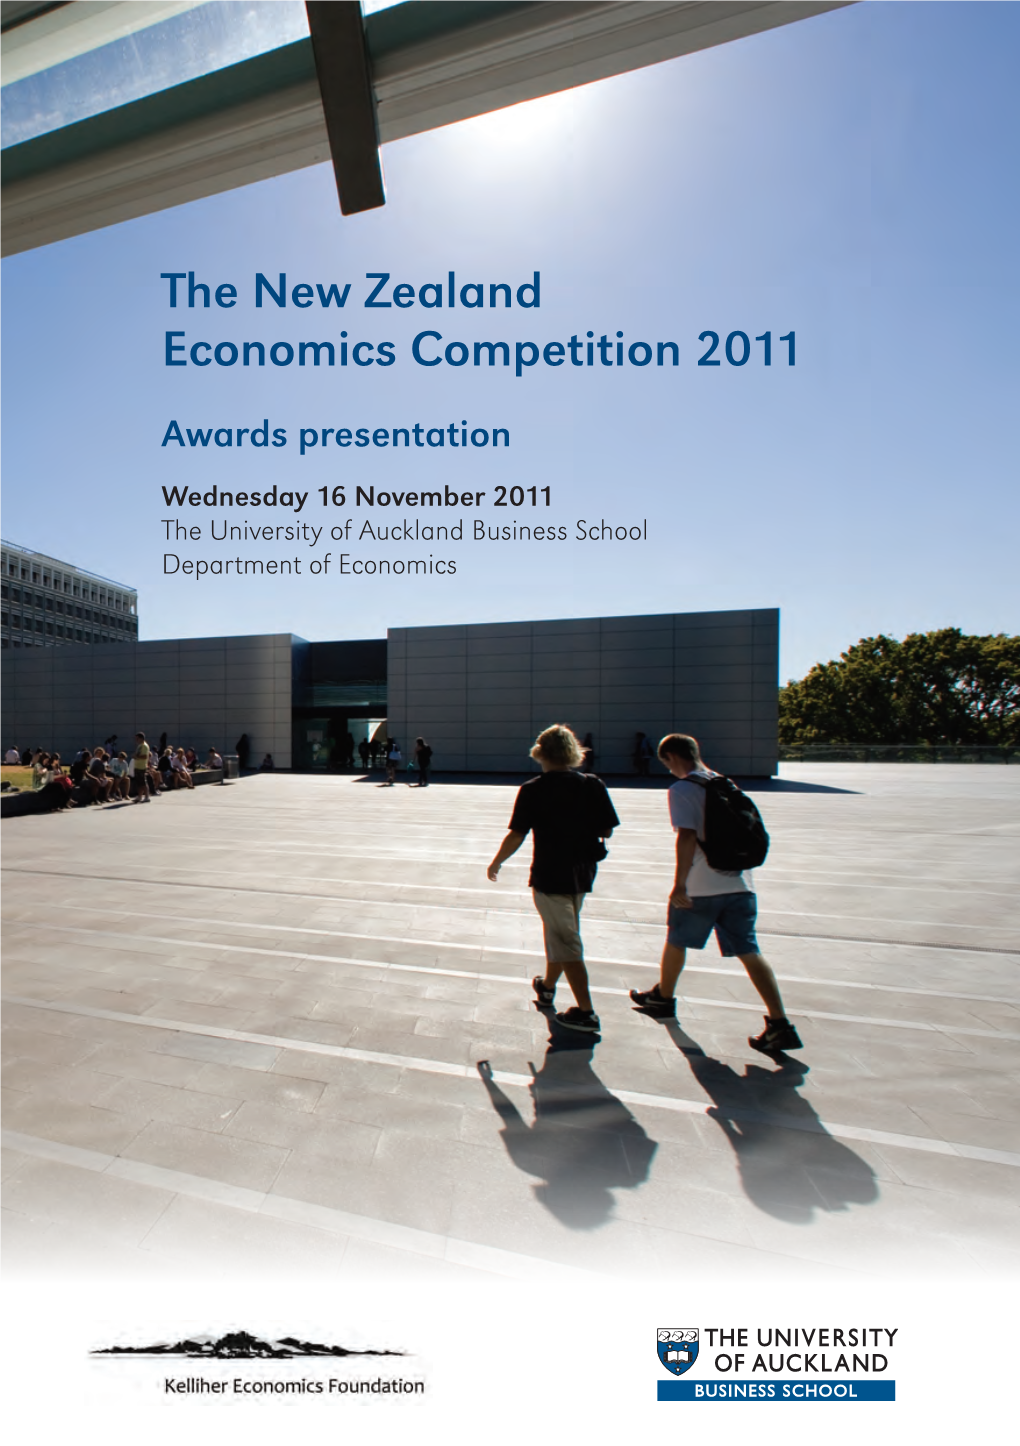 The New Zealand Economics Competition 2011